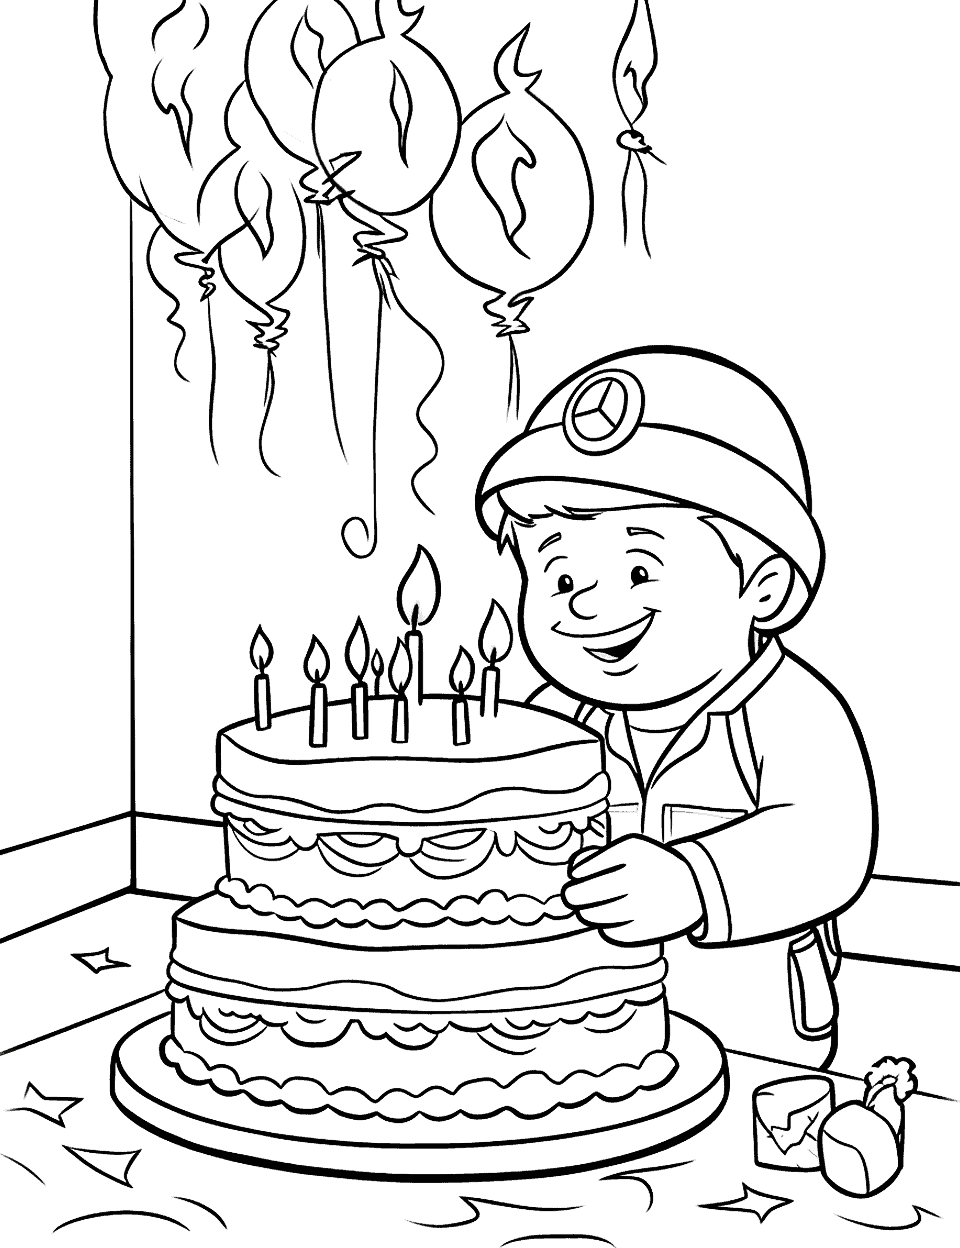 Firefighter's Birthday Blaze Happy Coloring Page - A firefighter celebrating his birthday.